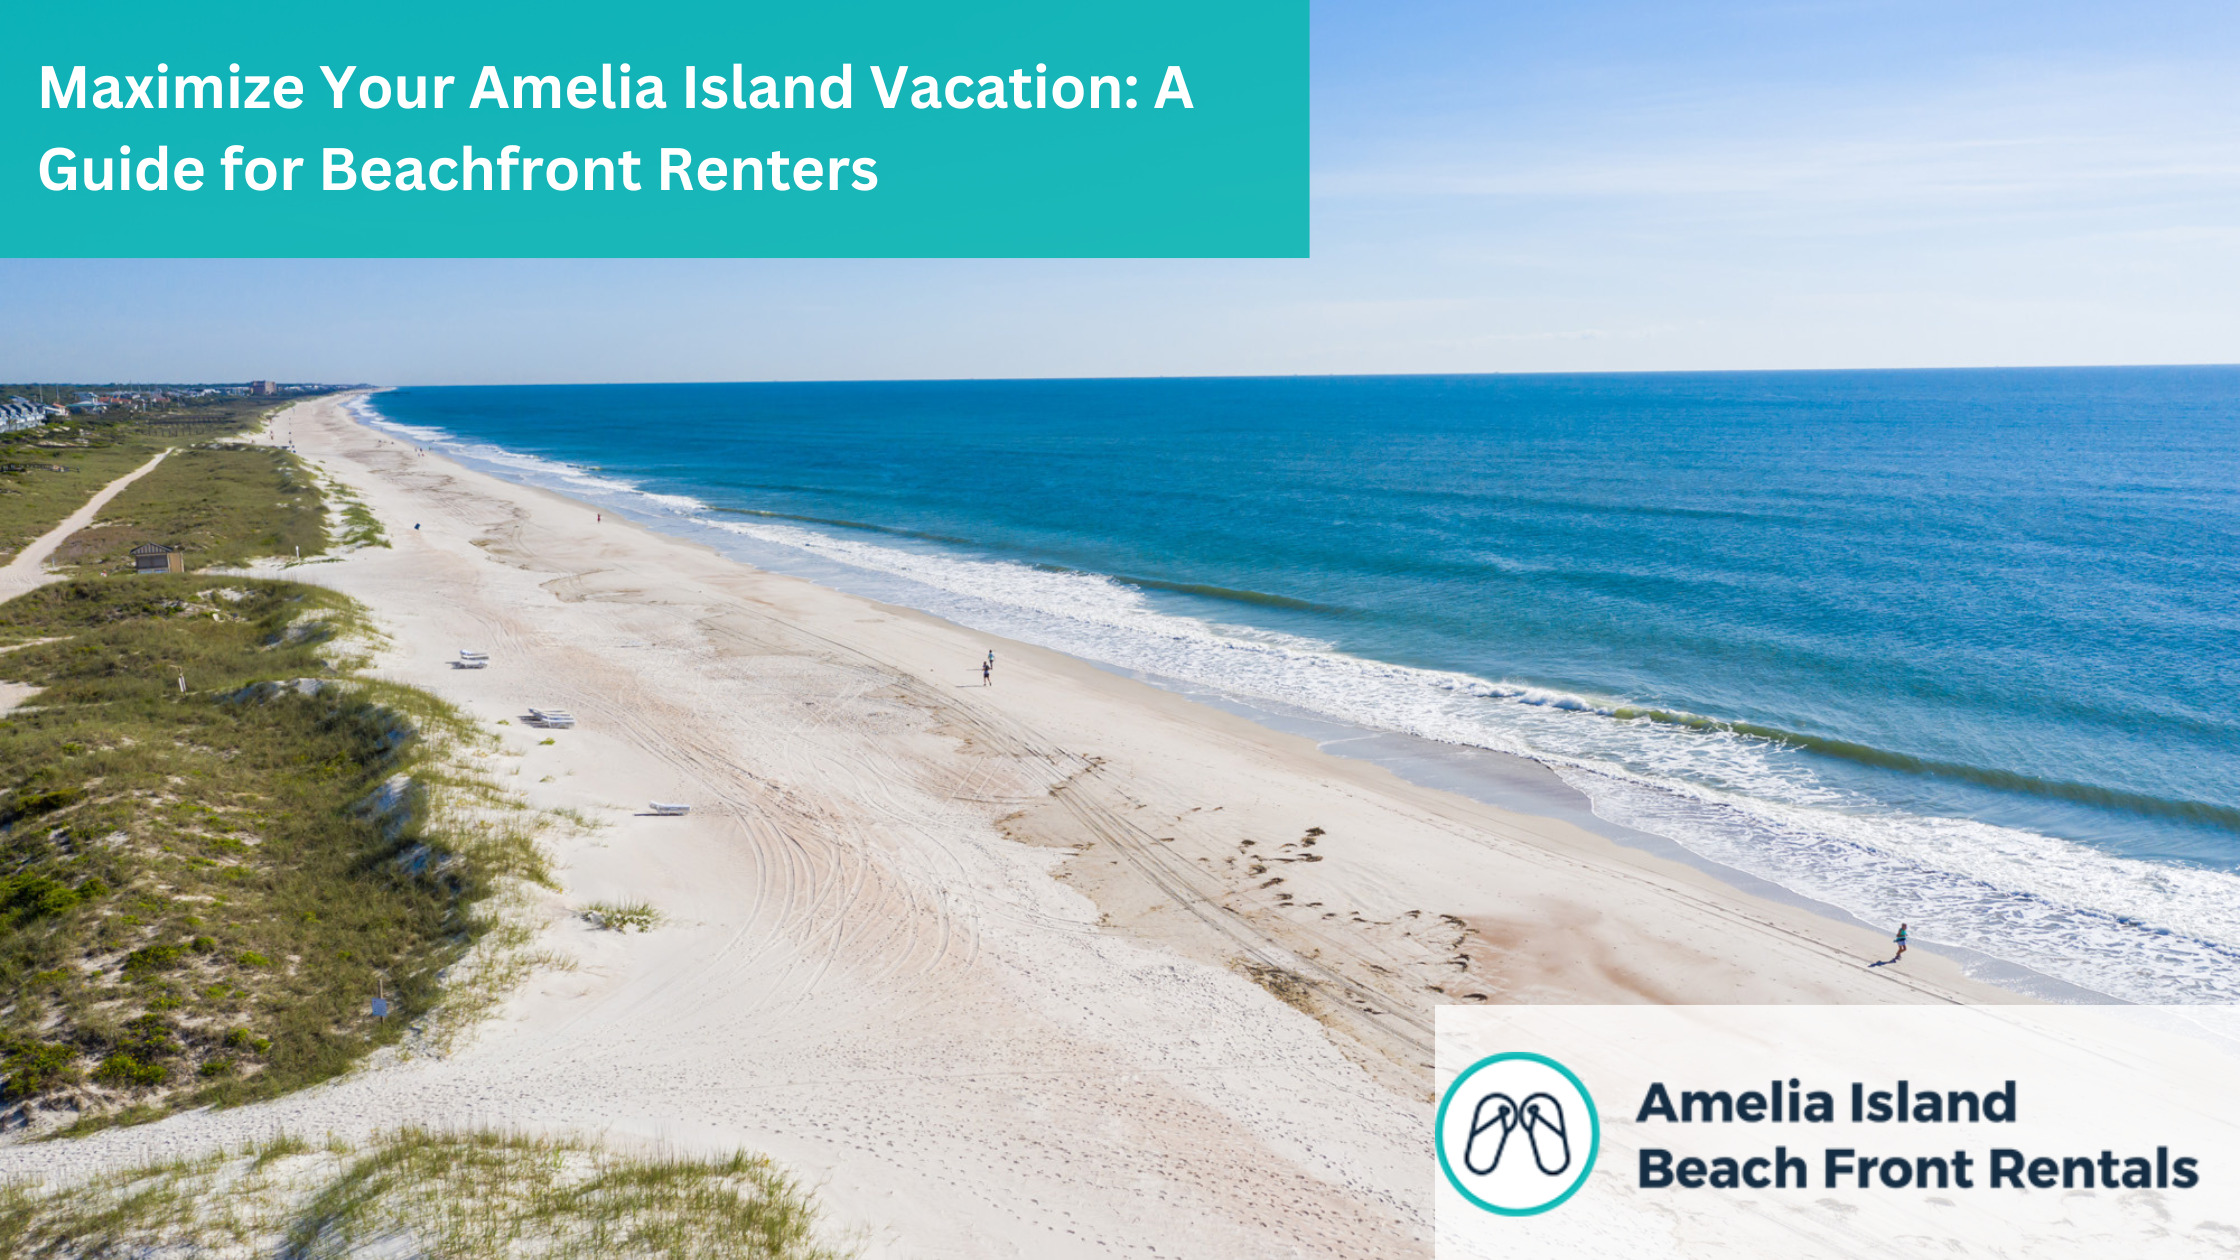 Maximize Your Amelia Island Vacation - Maximize Your Amelia Island Vacation: A Guide for Beachfront Renters